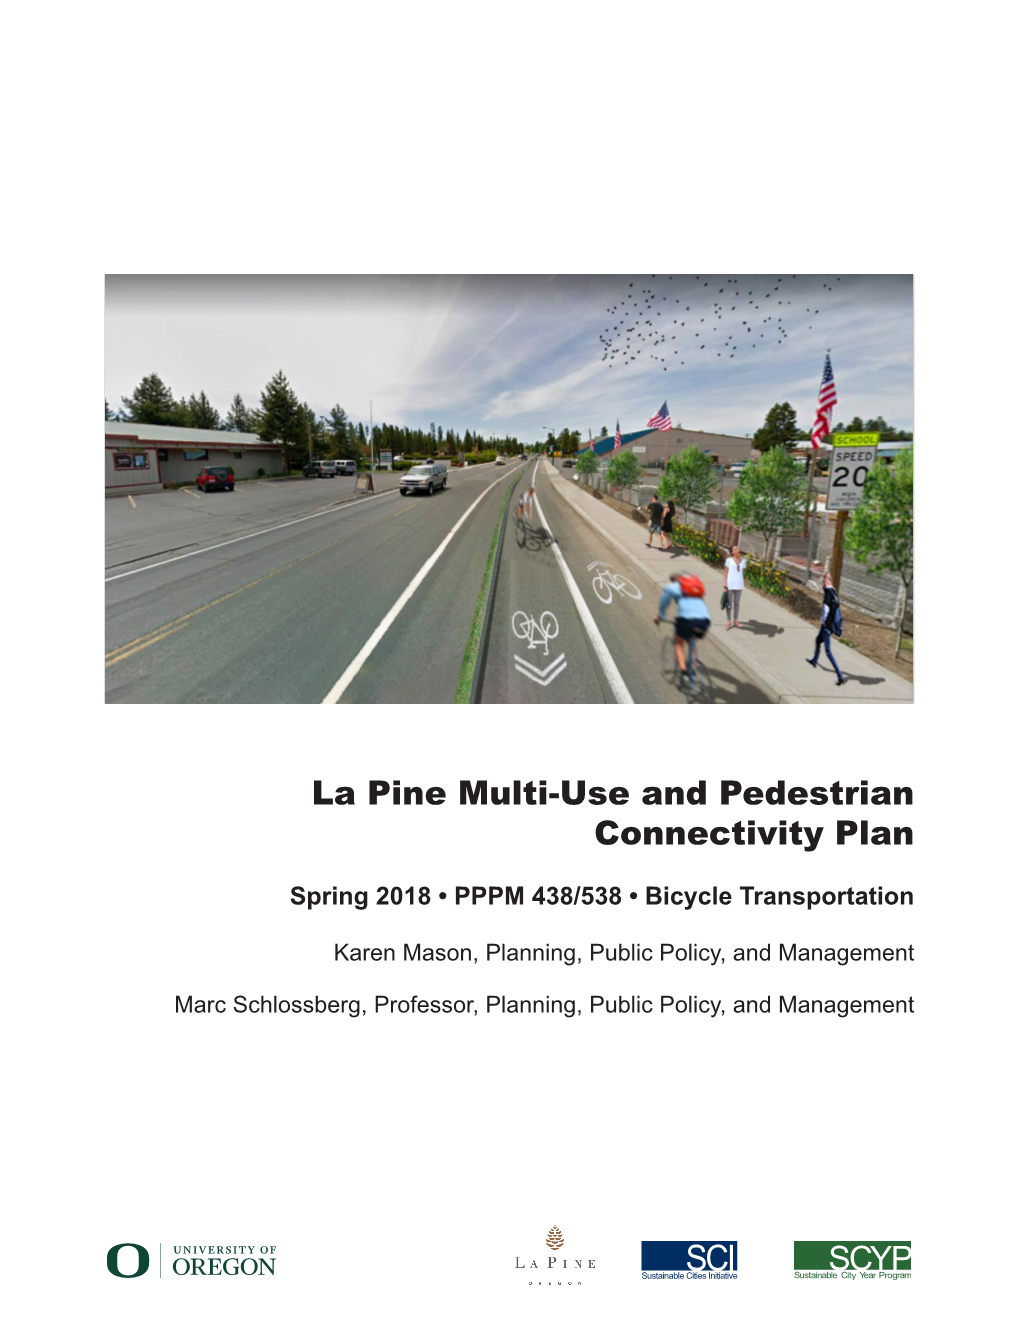 La Pine Multi-Use and Pedestrian Connectivity Plan